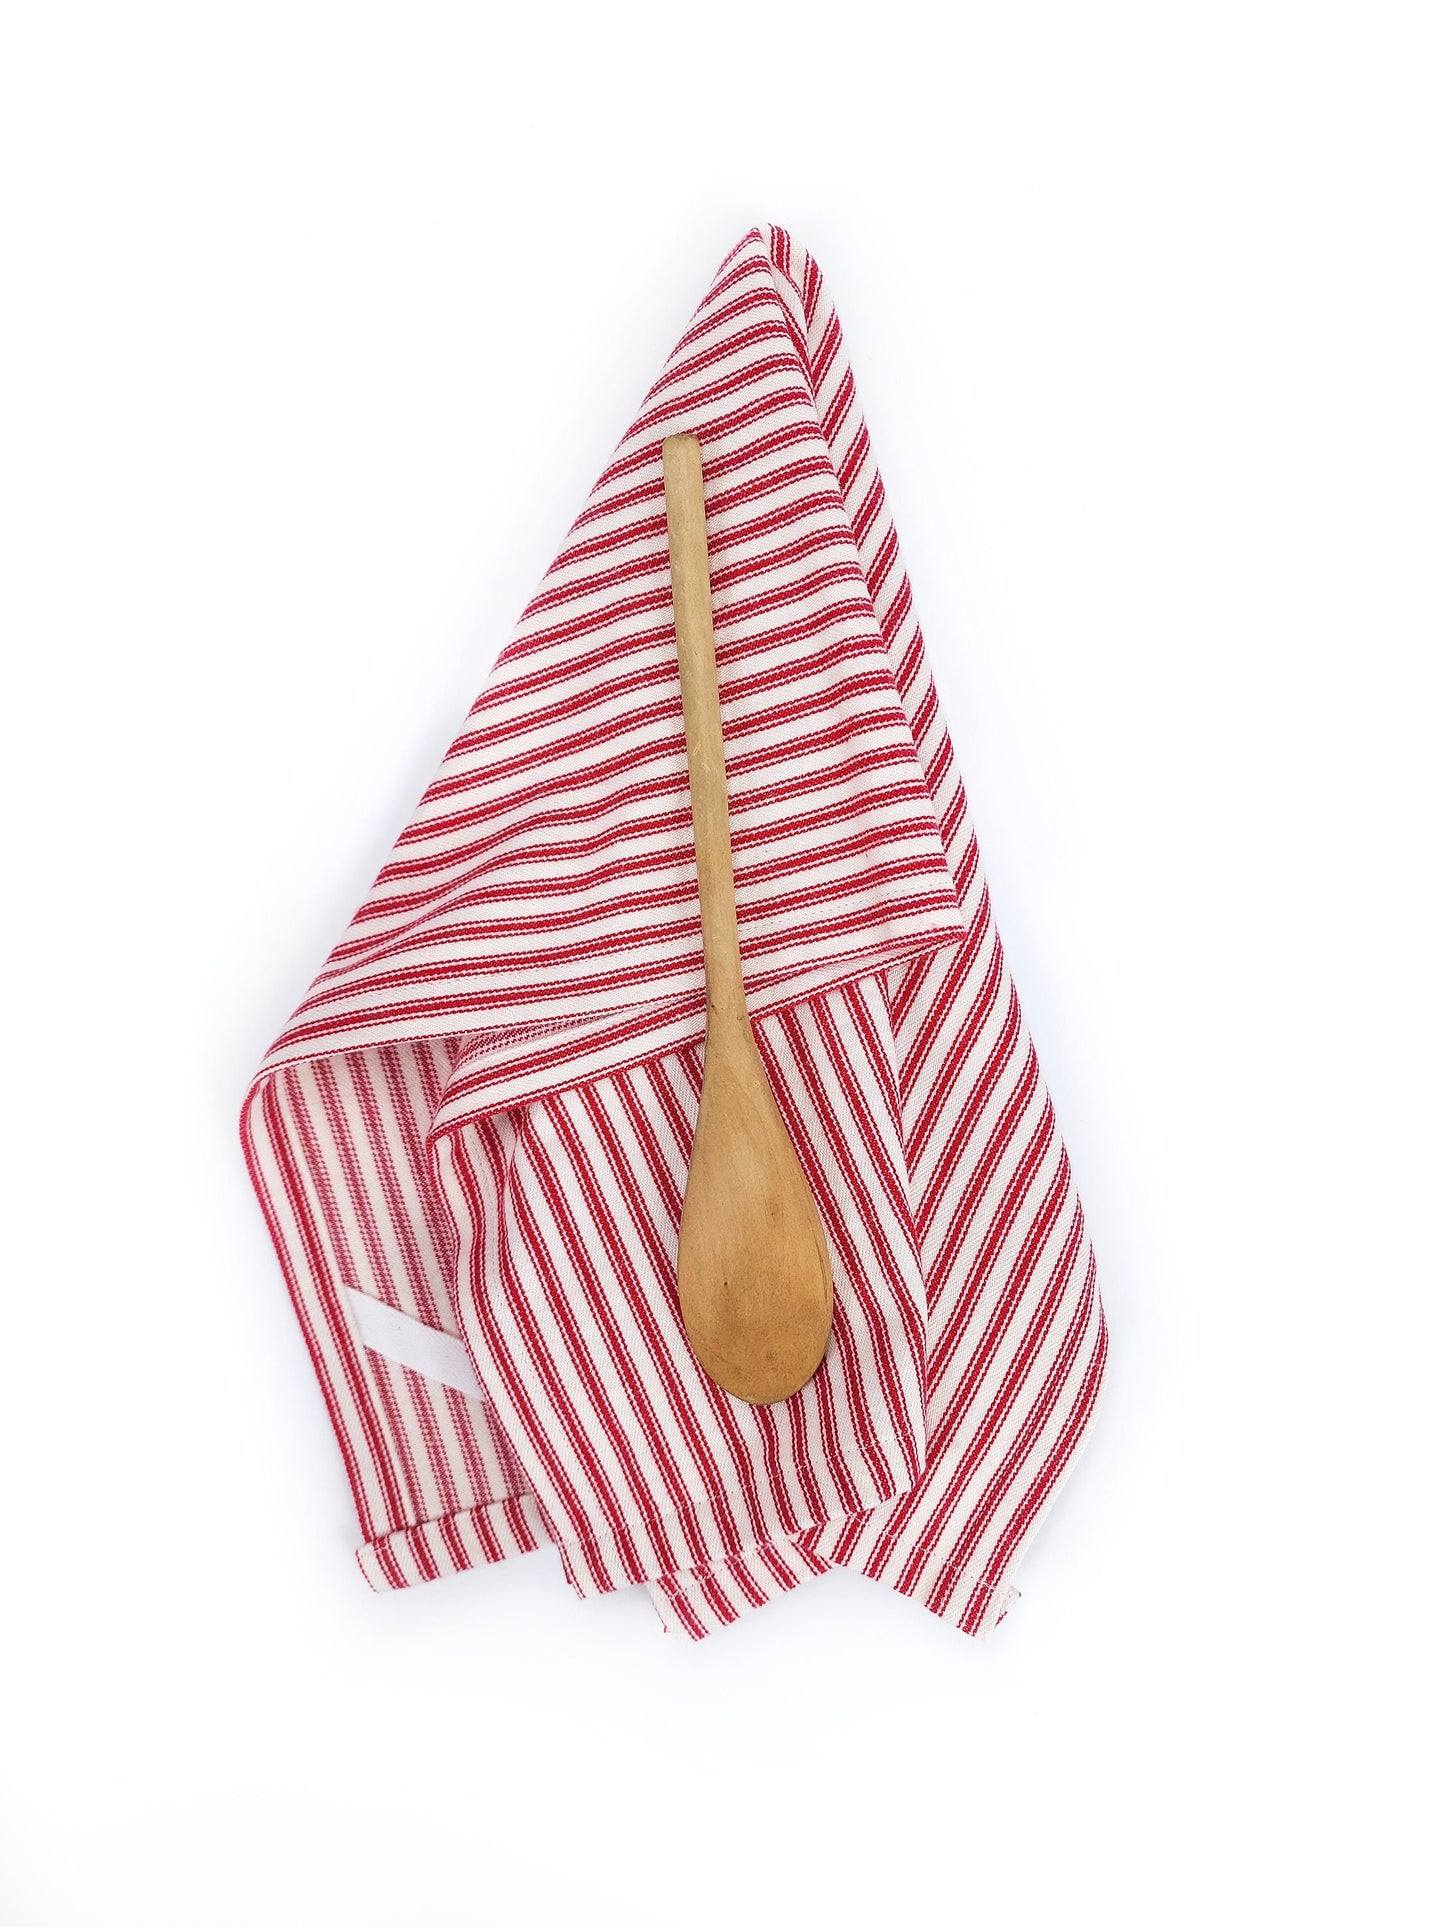 Red Ticking Stripe Cotton Towel, Christmas Kitchen Towel